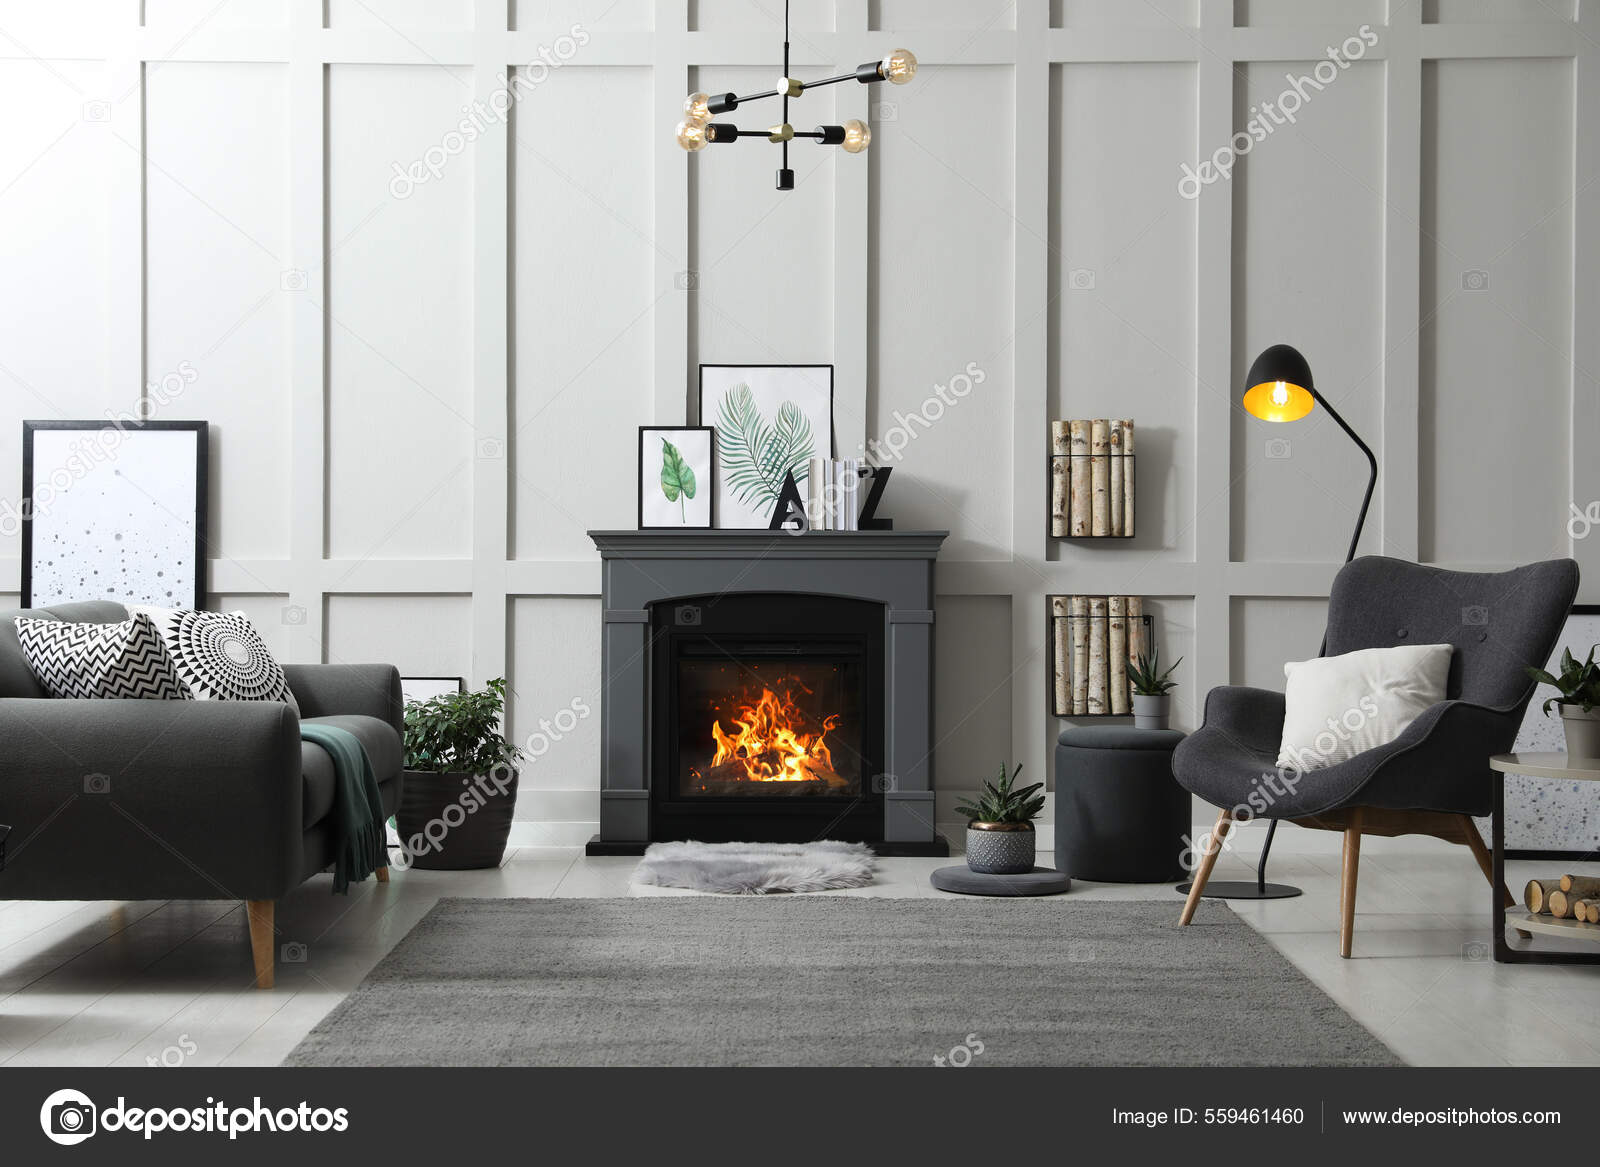 https://st.depositphotos.com/16122460/55946/i/1600/depositphotos_559461460-stock-photo-stylish-living-room-interior-electric.jpg